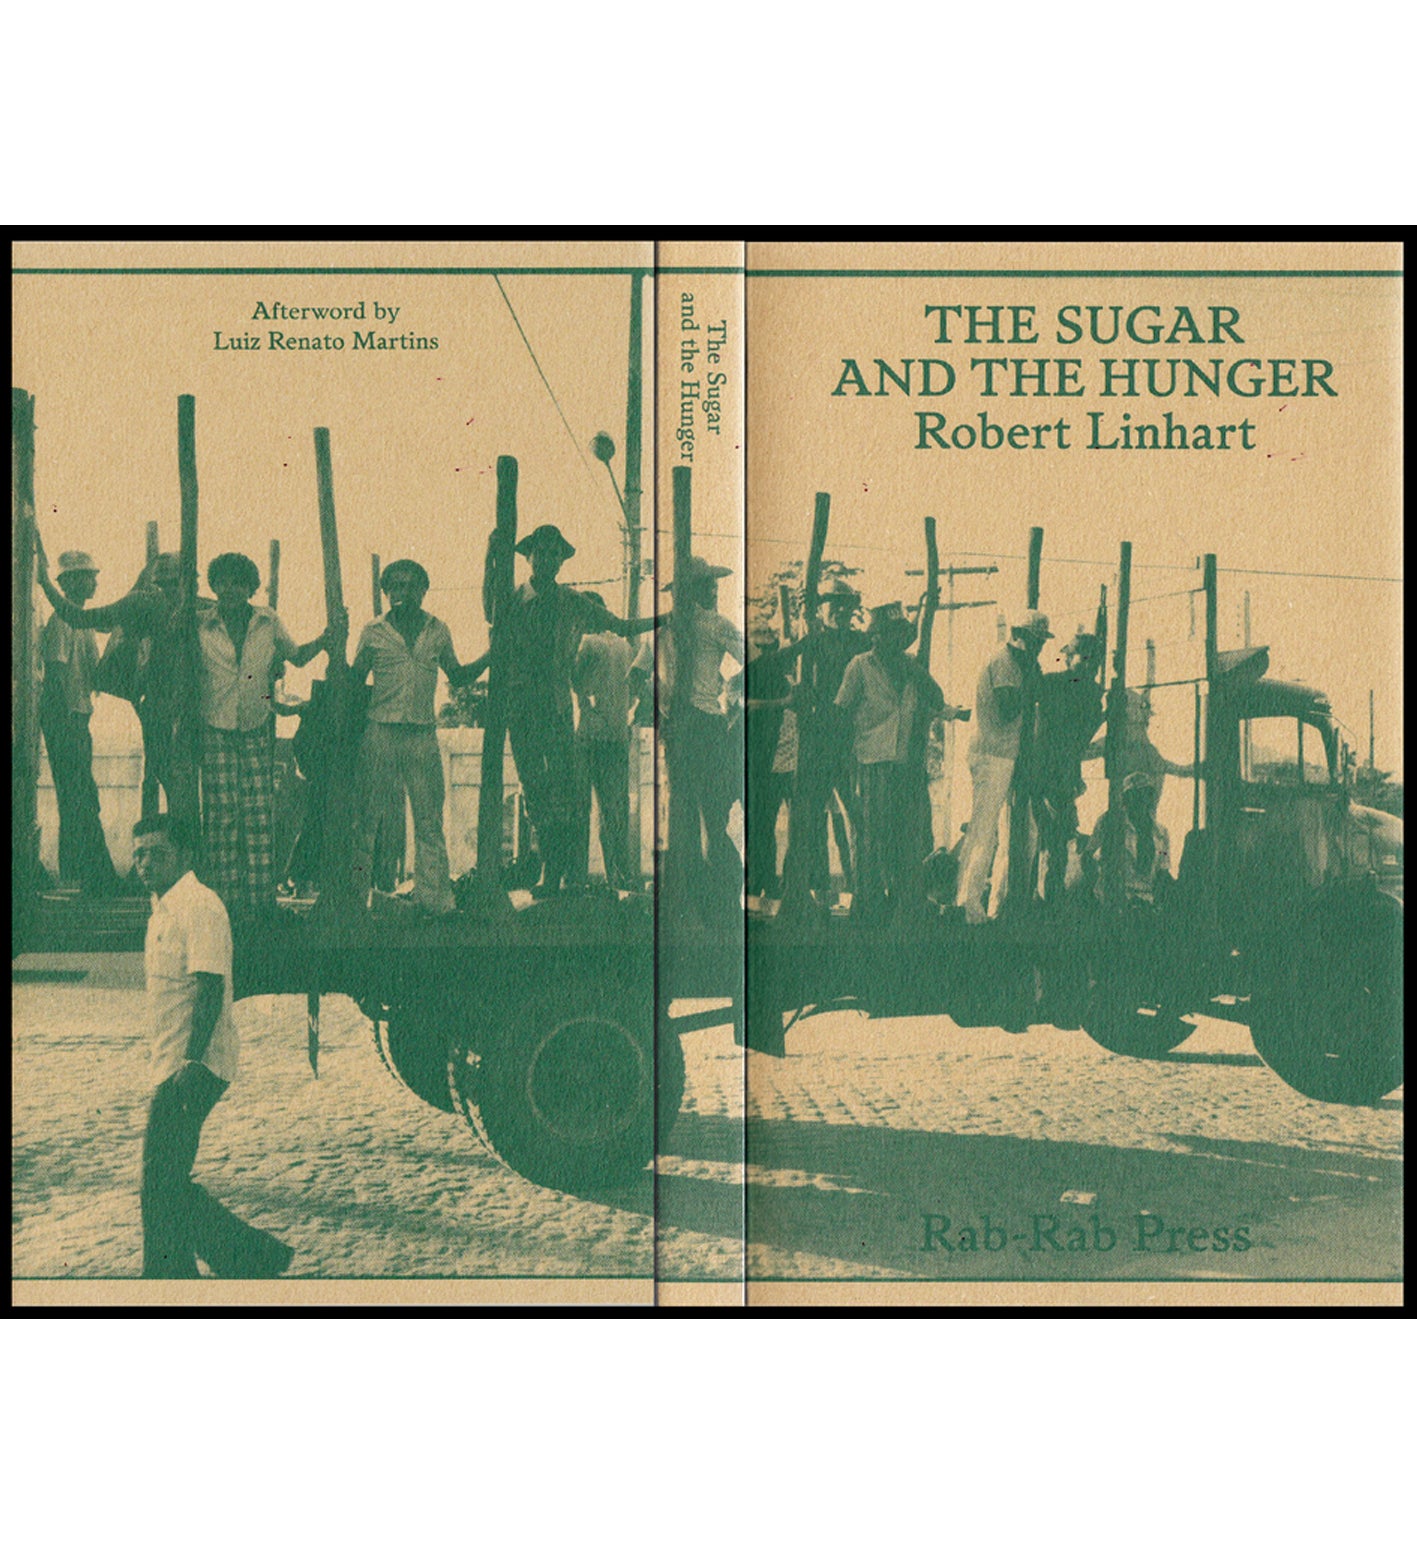 Robert Linhart: The Sugar and the Hunger